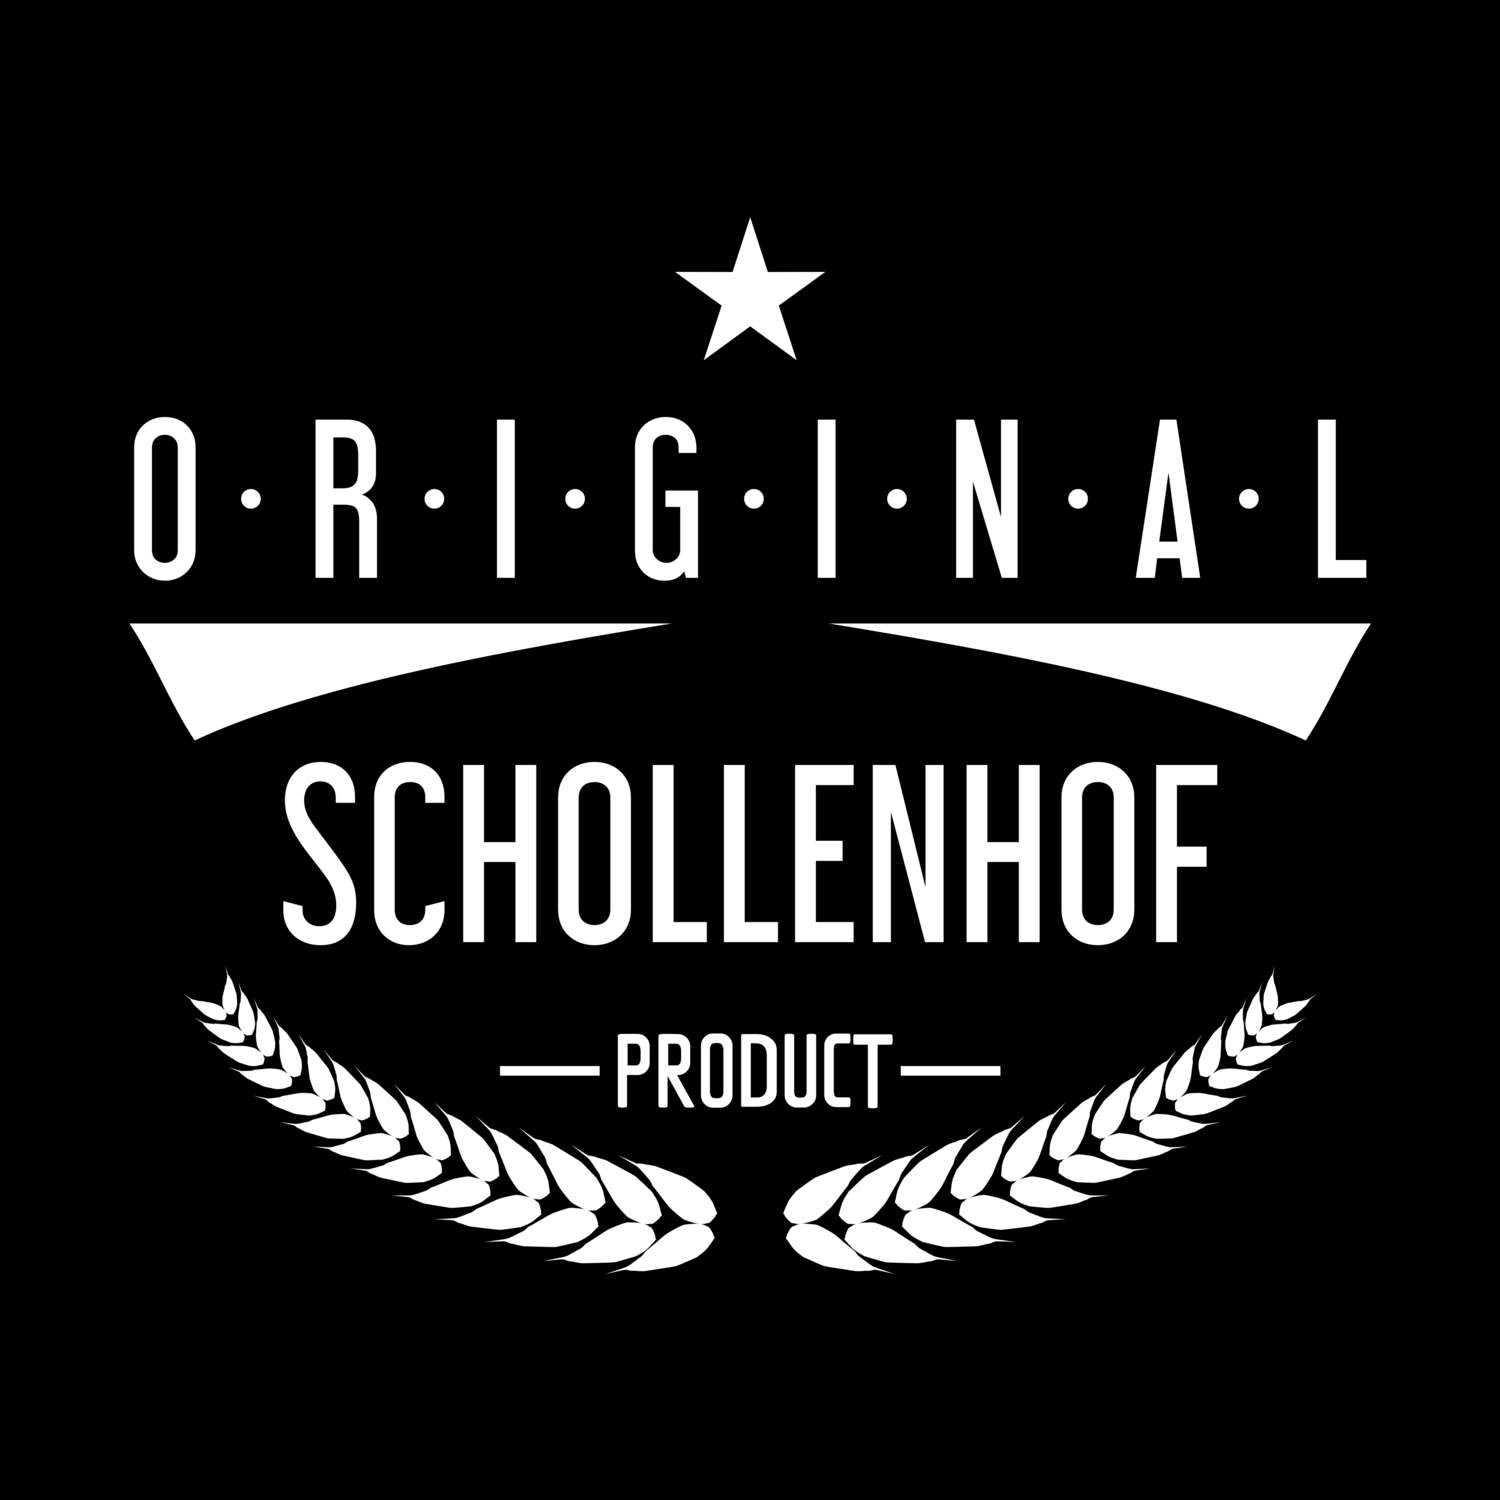 Schollenhof T-Shirt »Original Product«